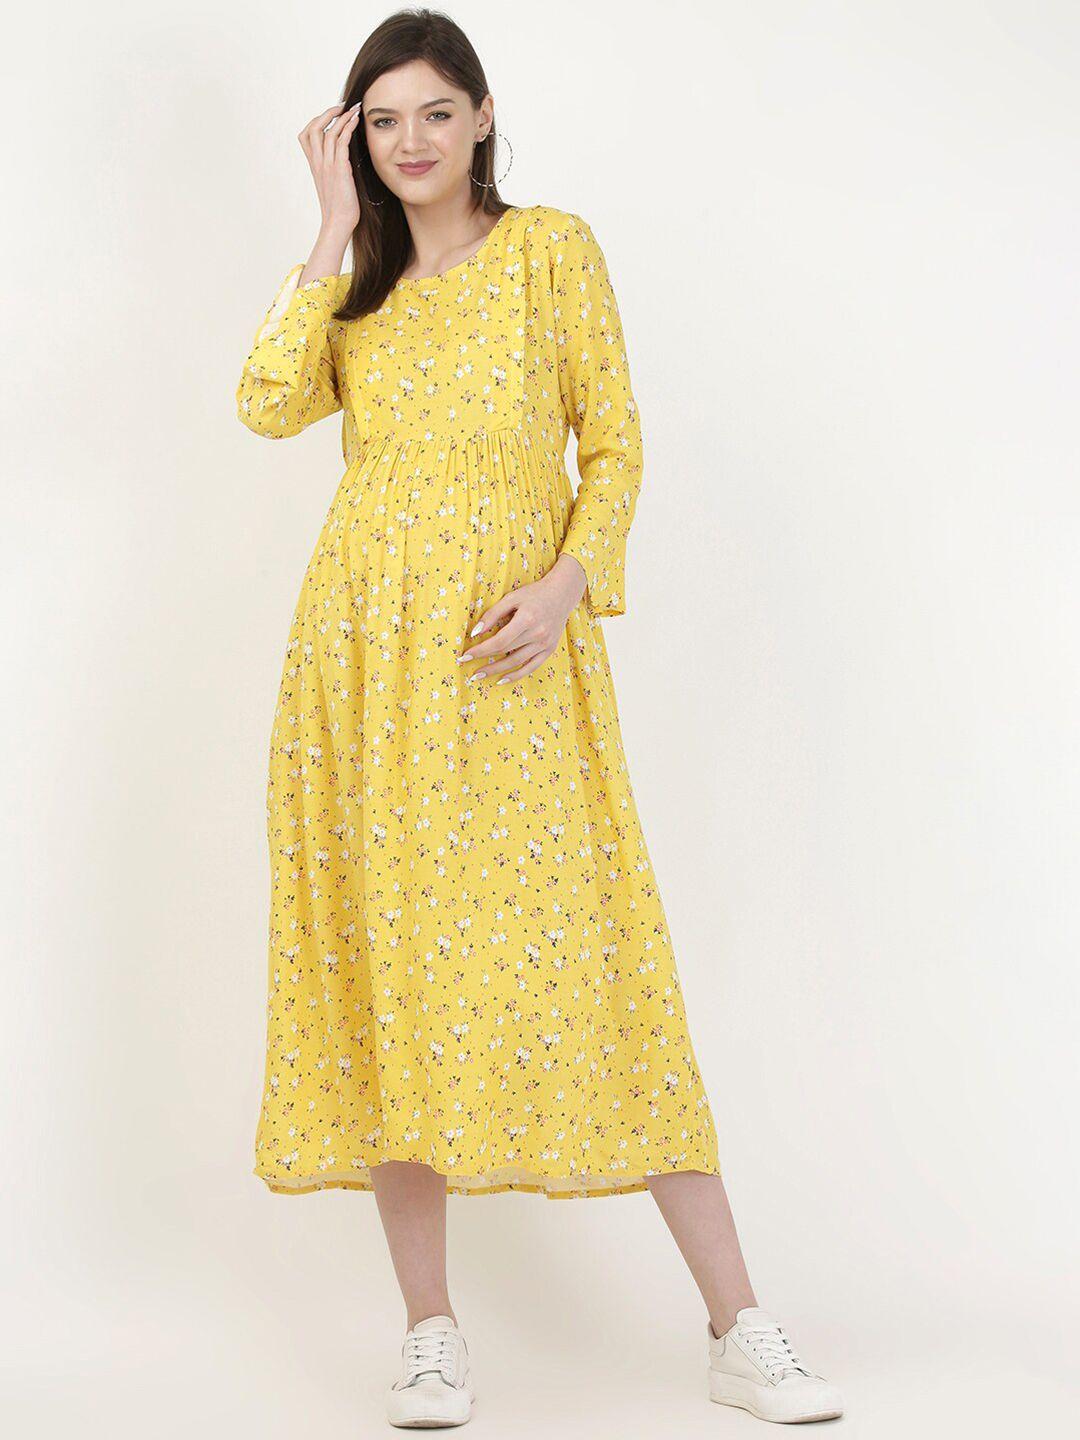 mylo essentials yellow & white floral maternity & nursing maxi dress